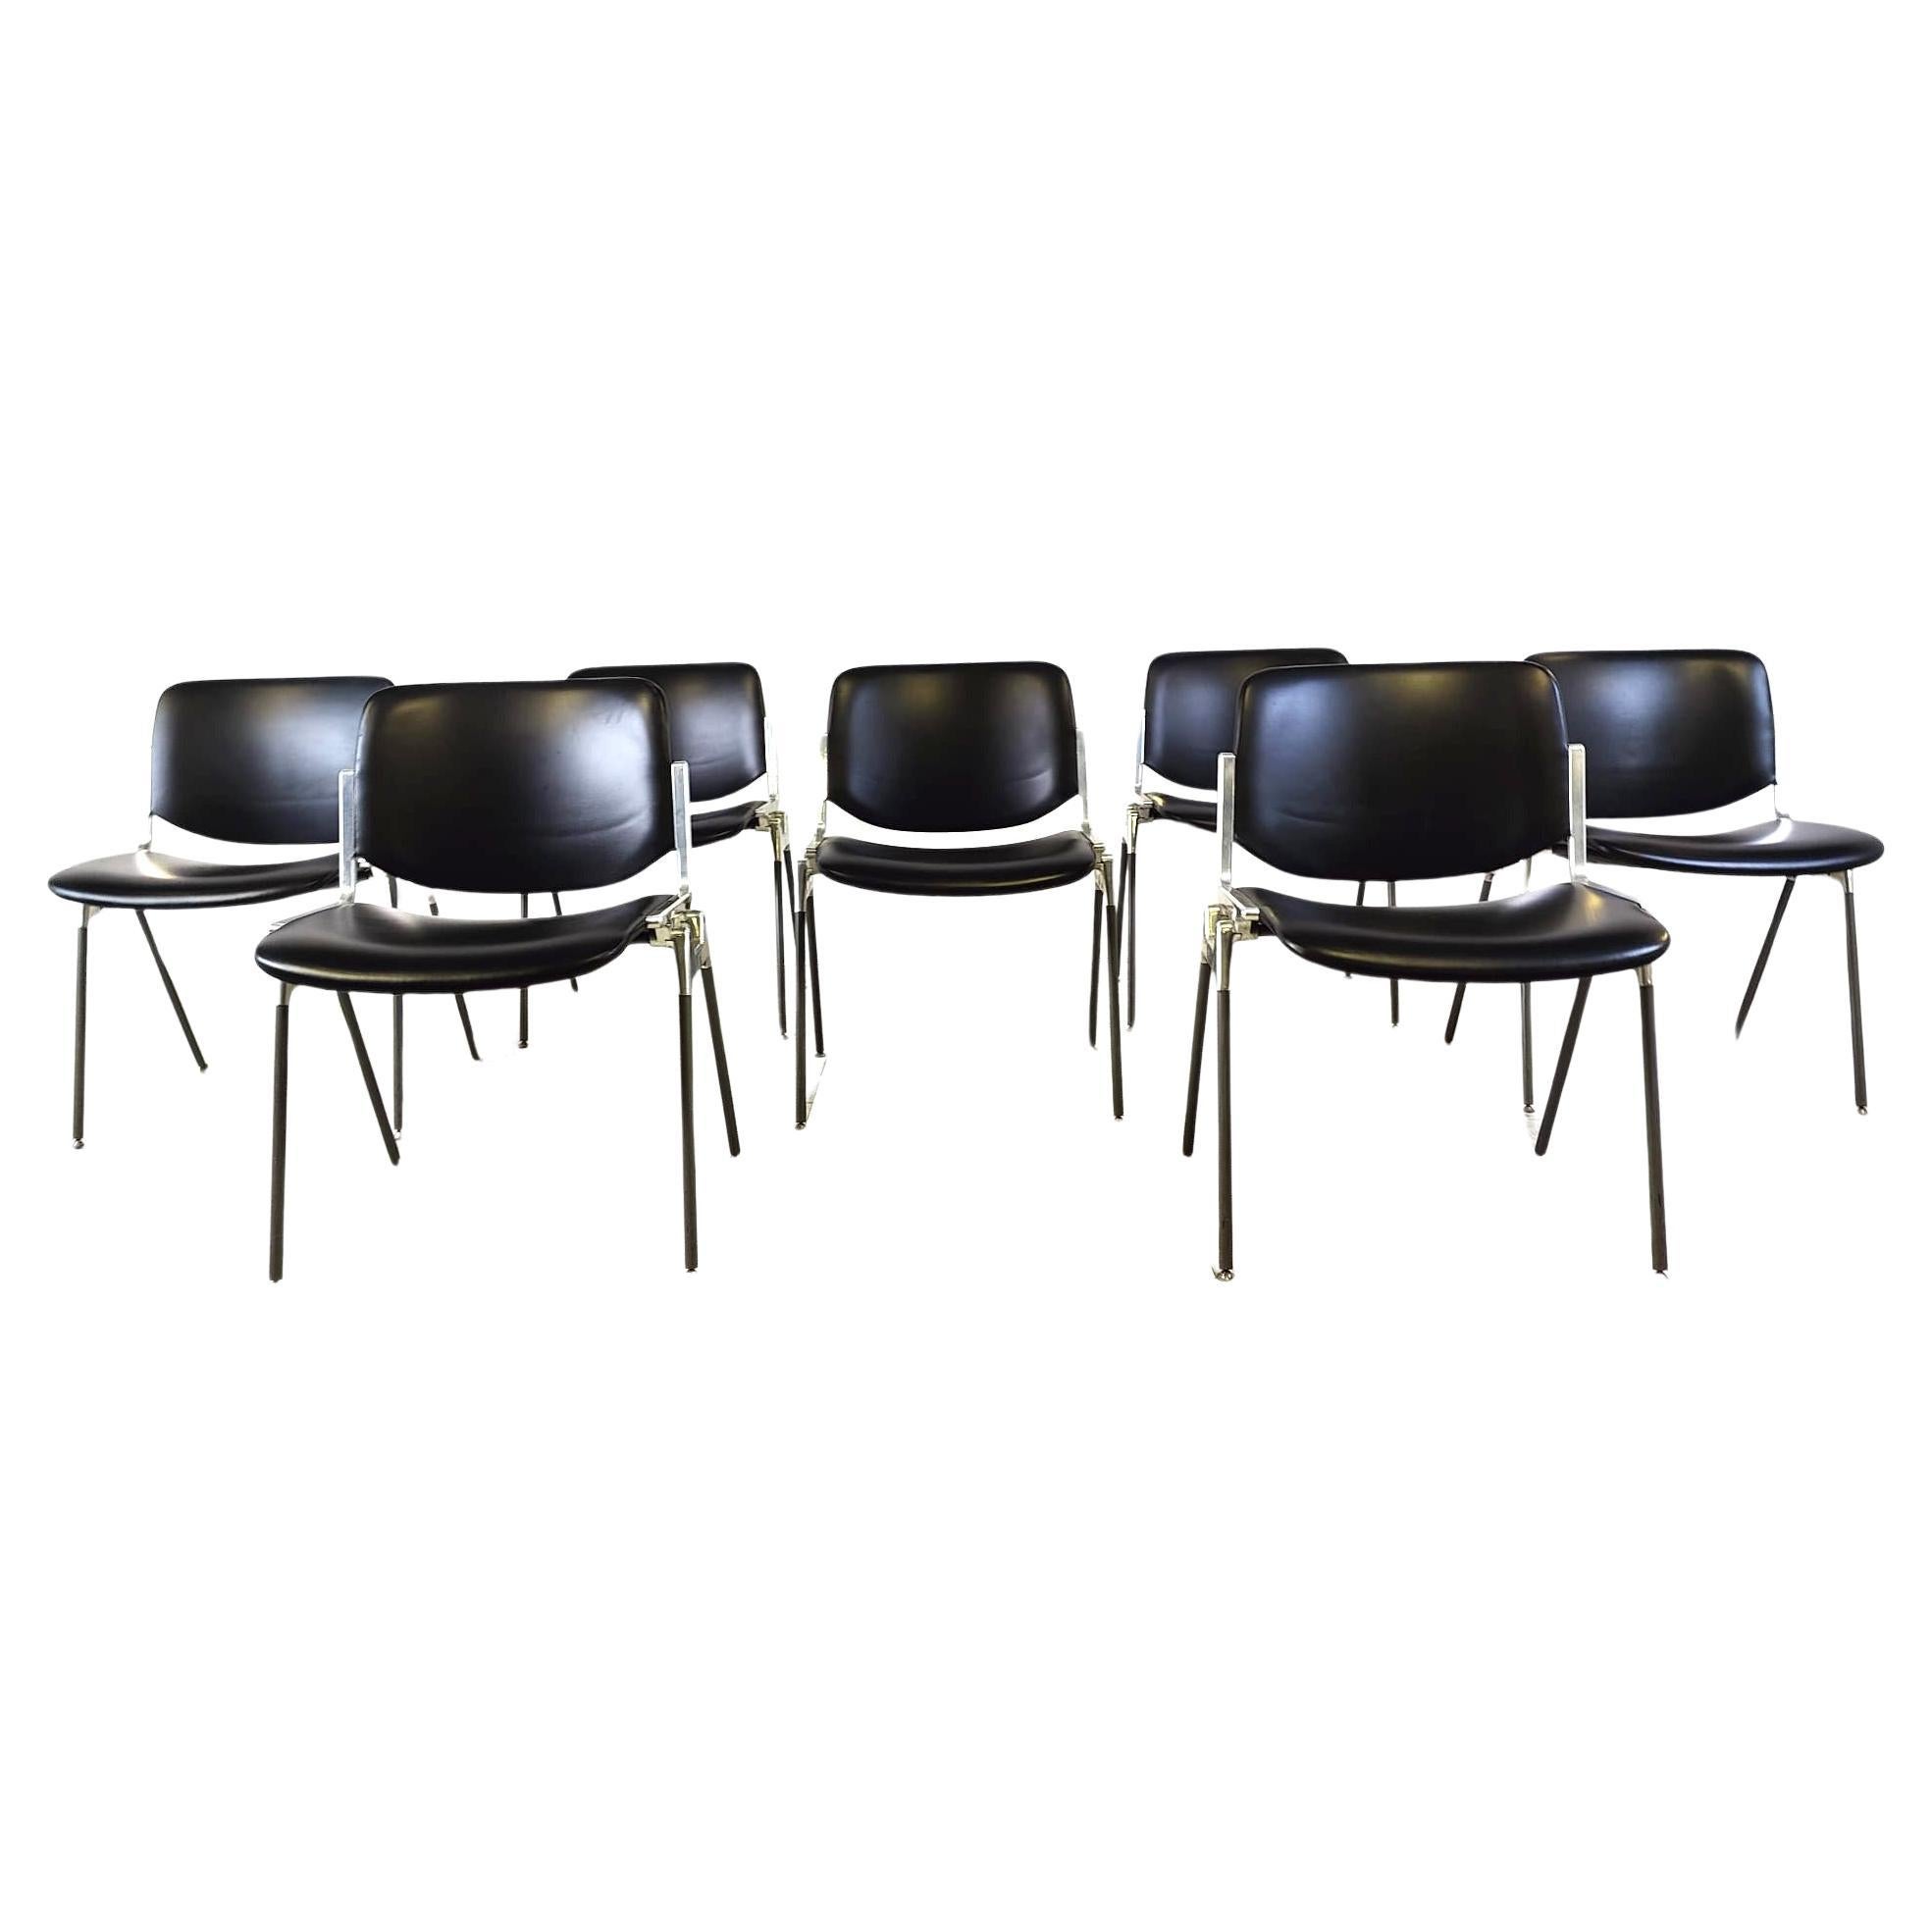 Anonima Castelli Dining Room Chairs